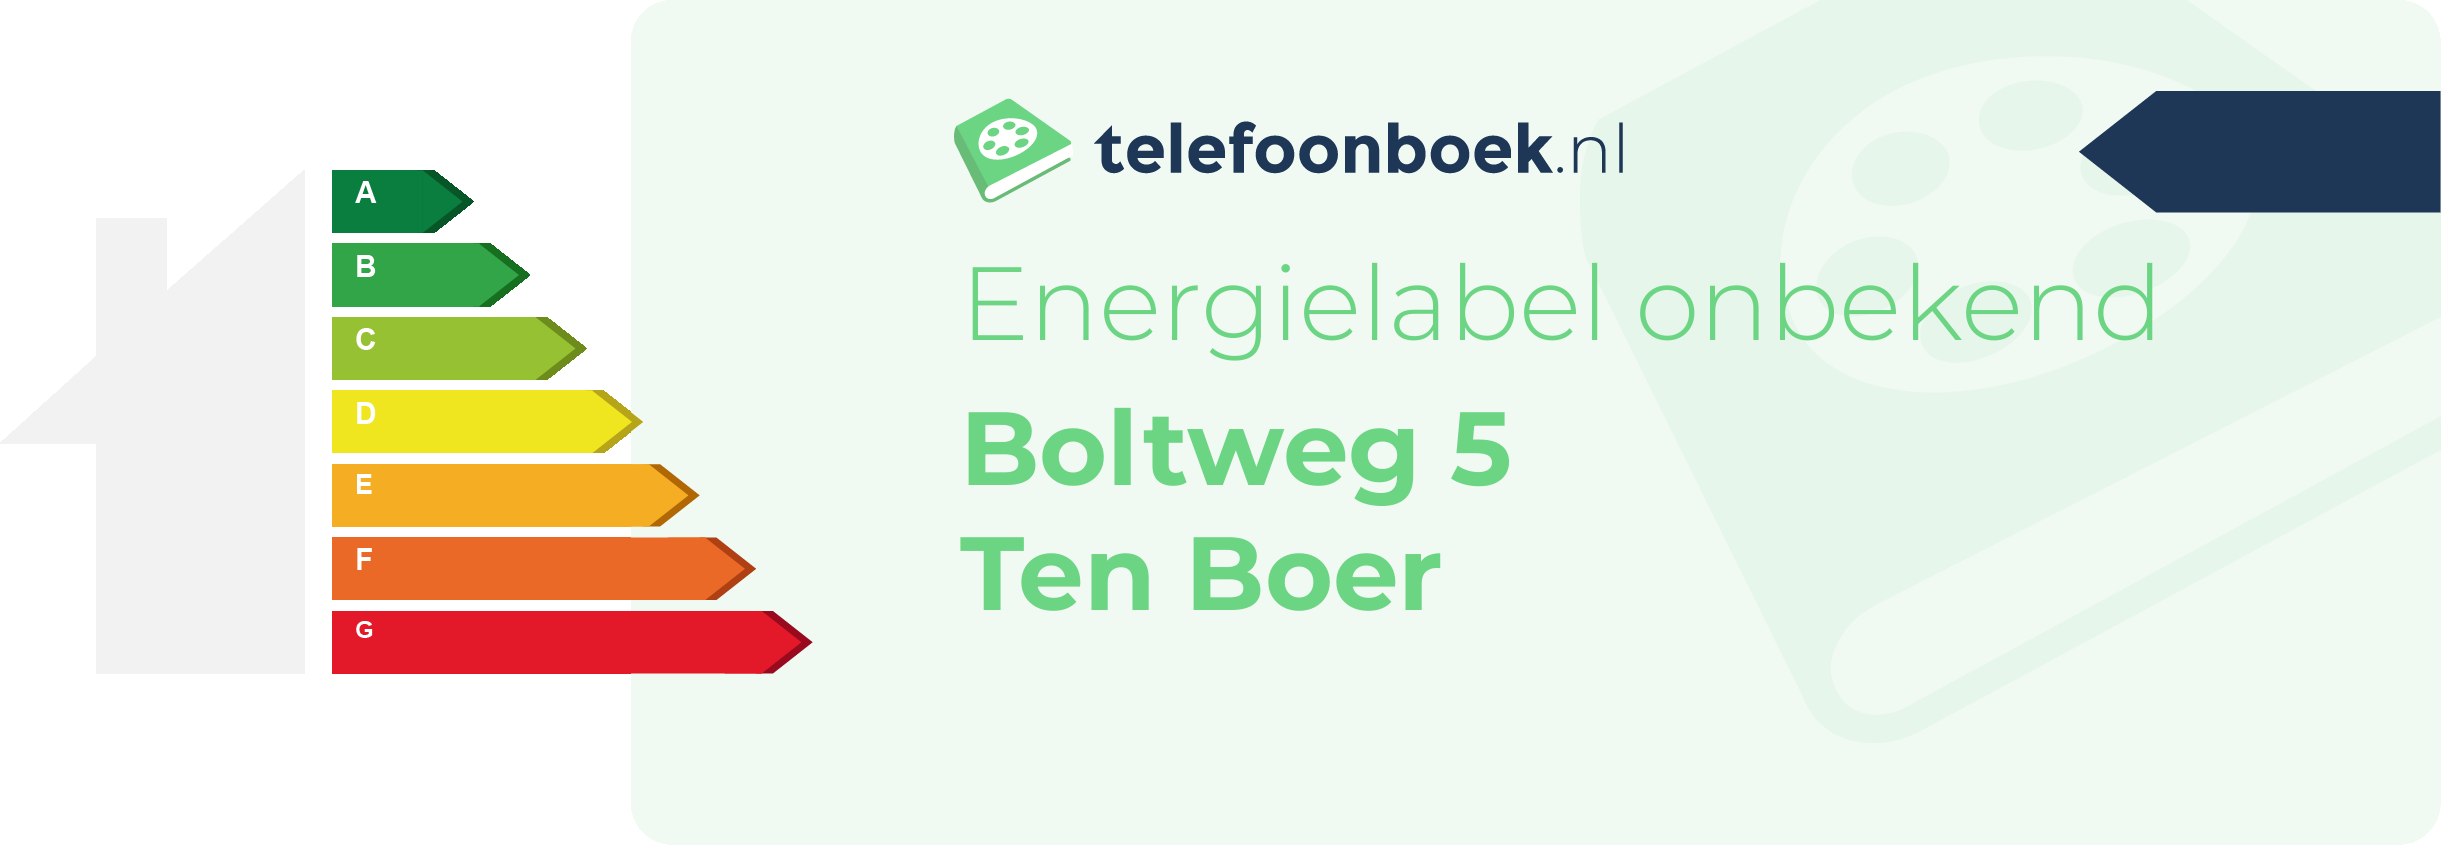 Energielabel Boltweg 5 Ten Boer